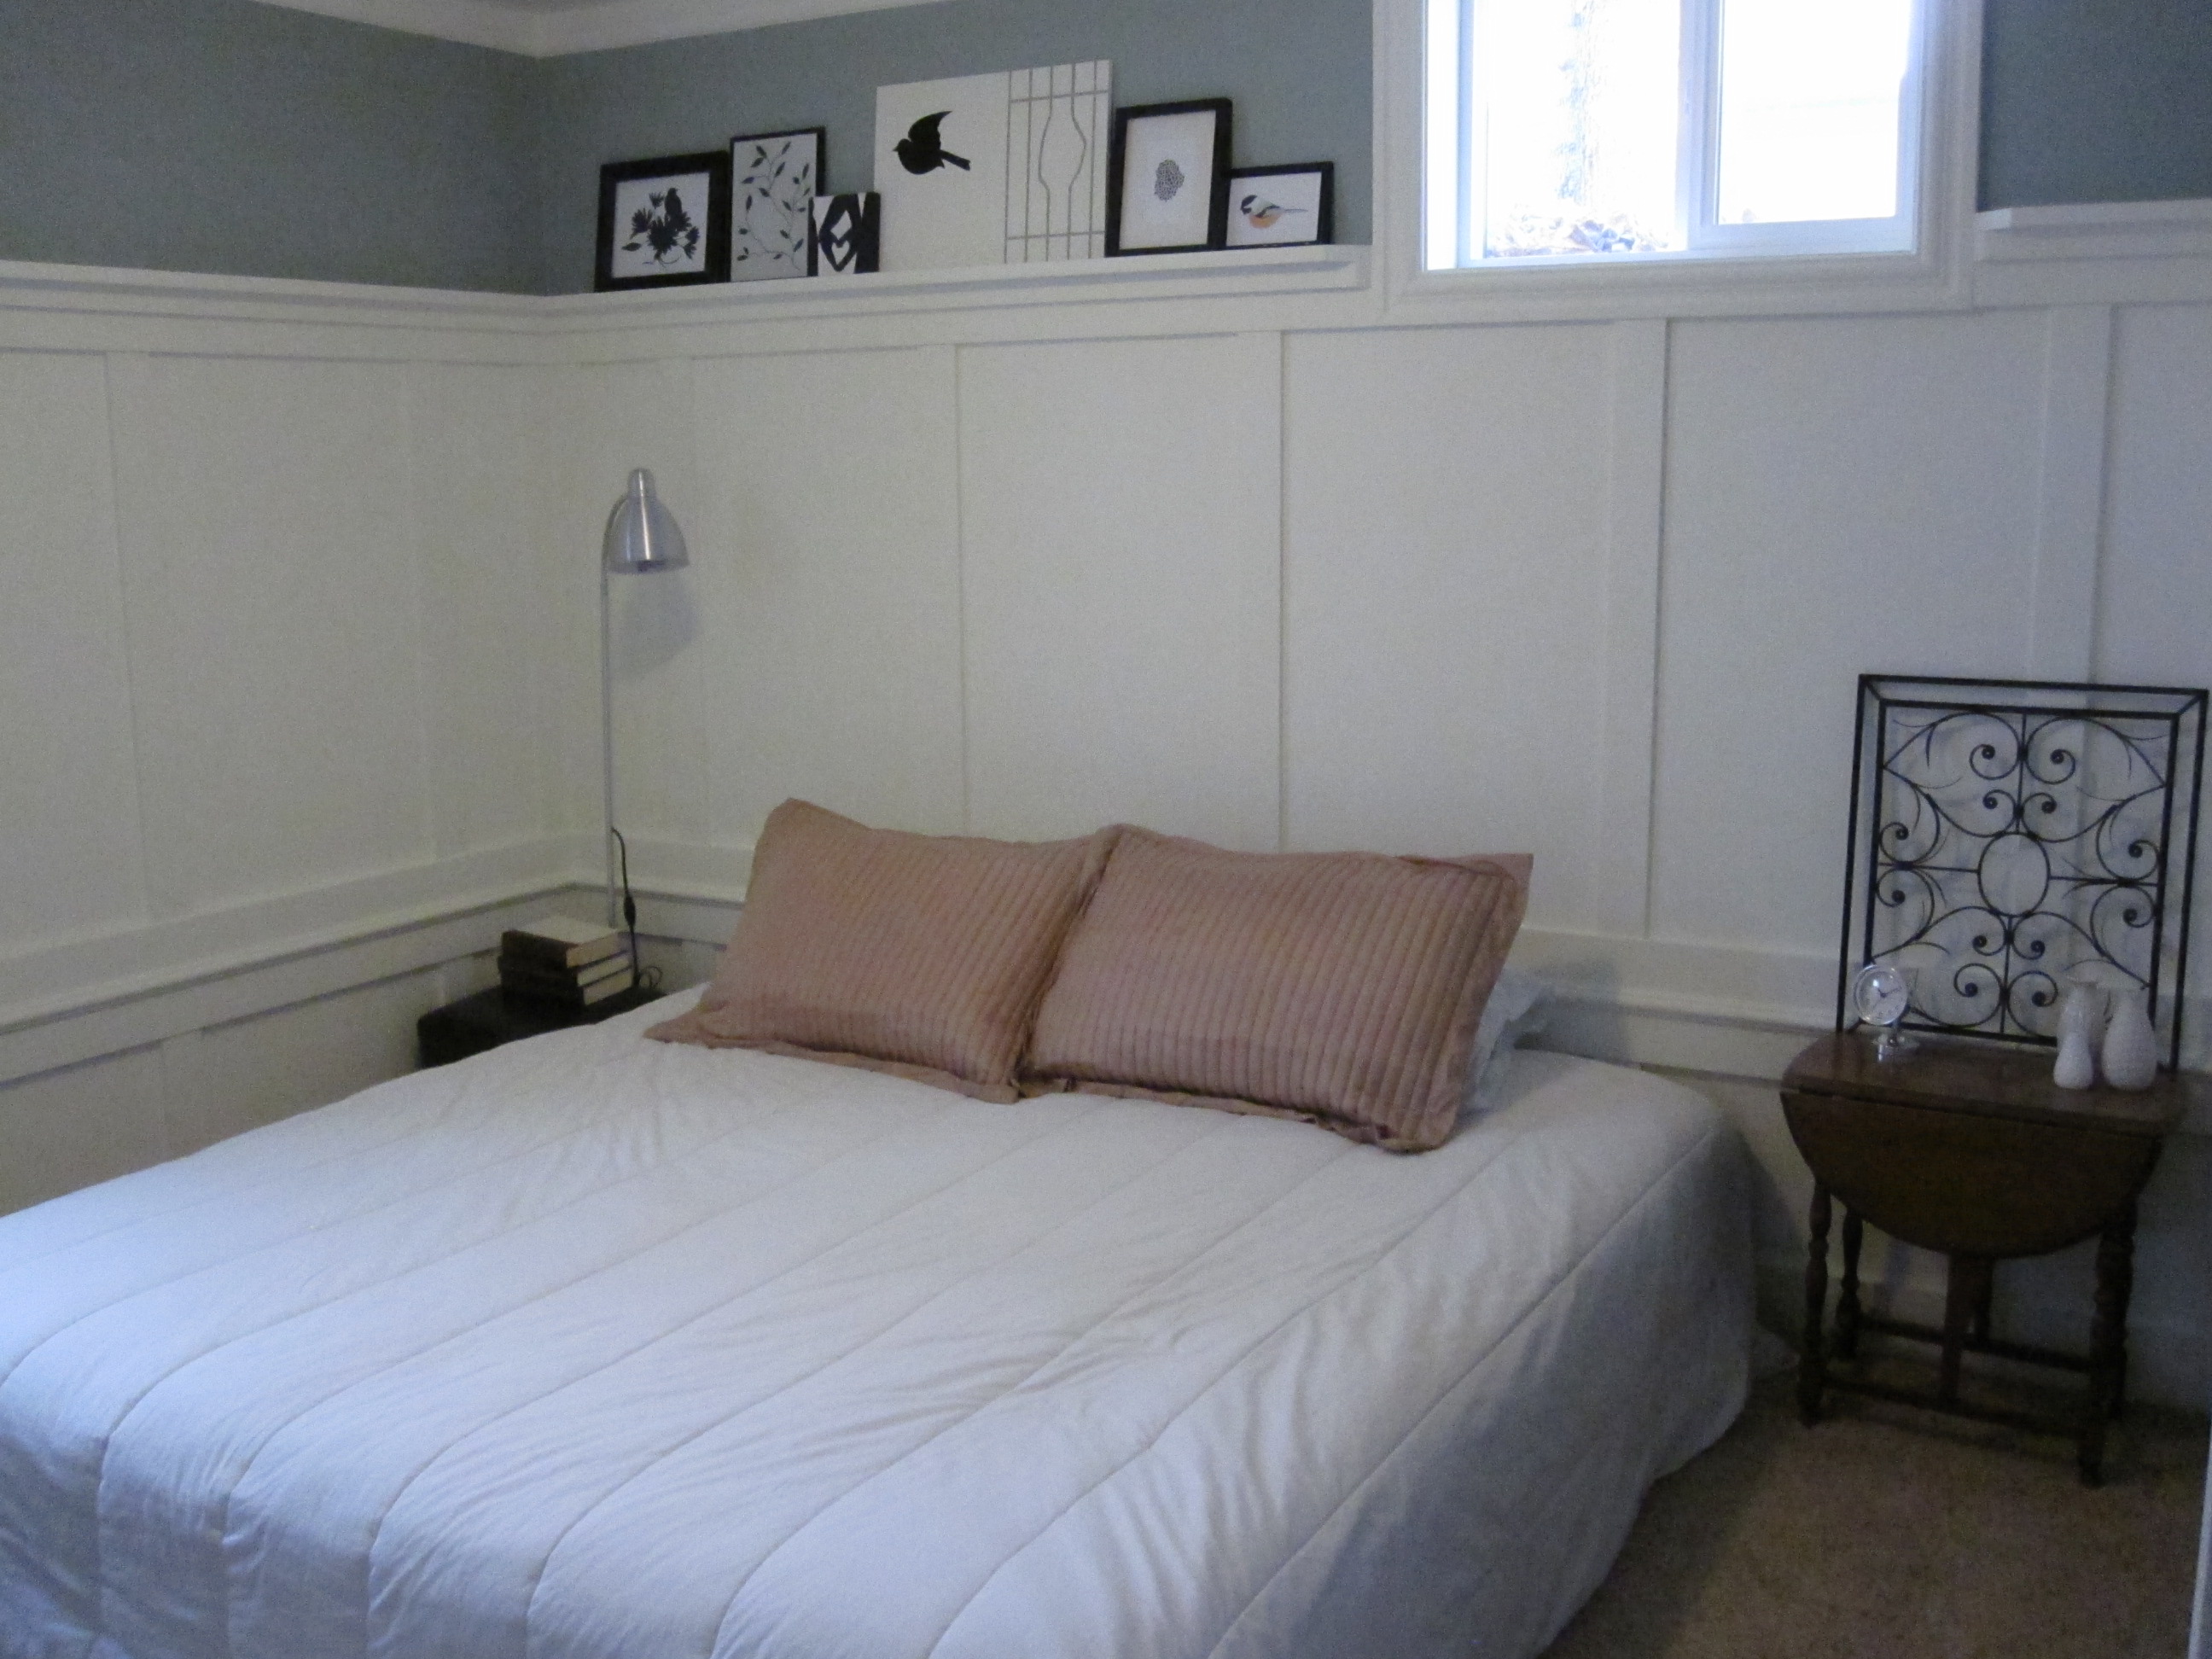 Basement Progress: Small Bedroom